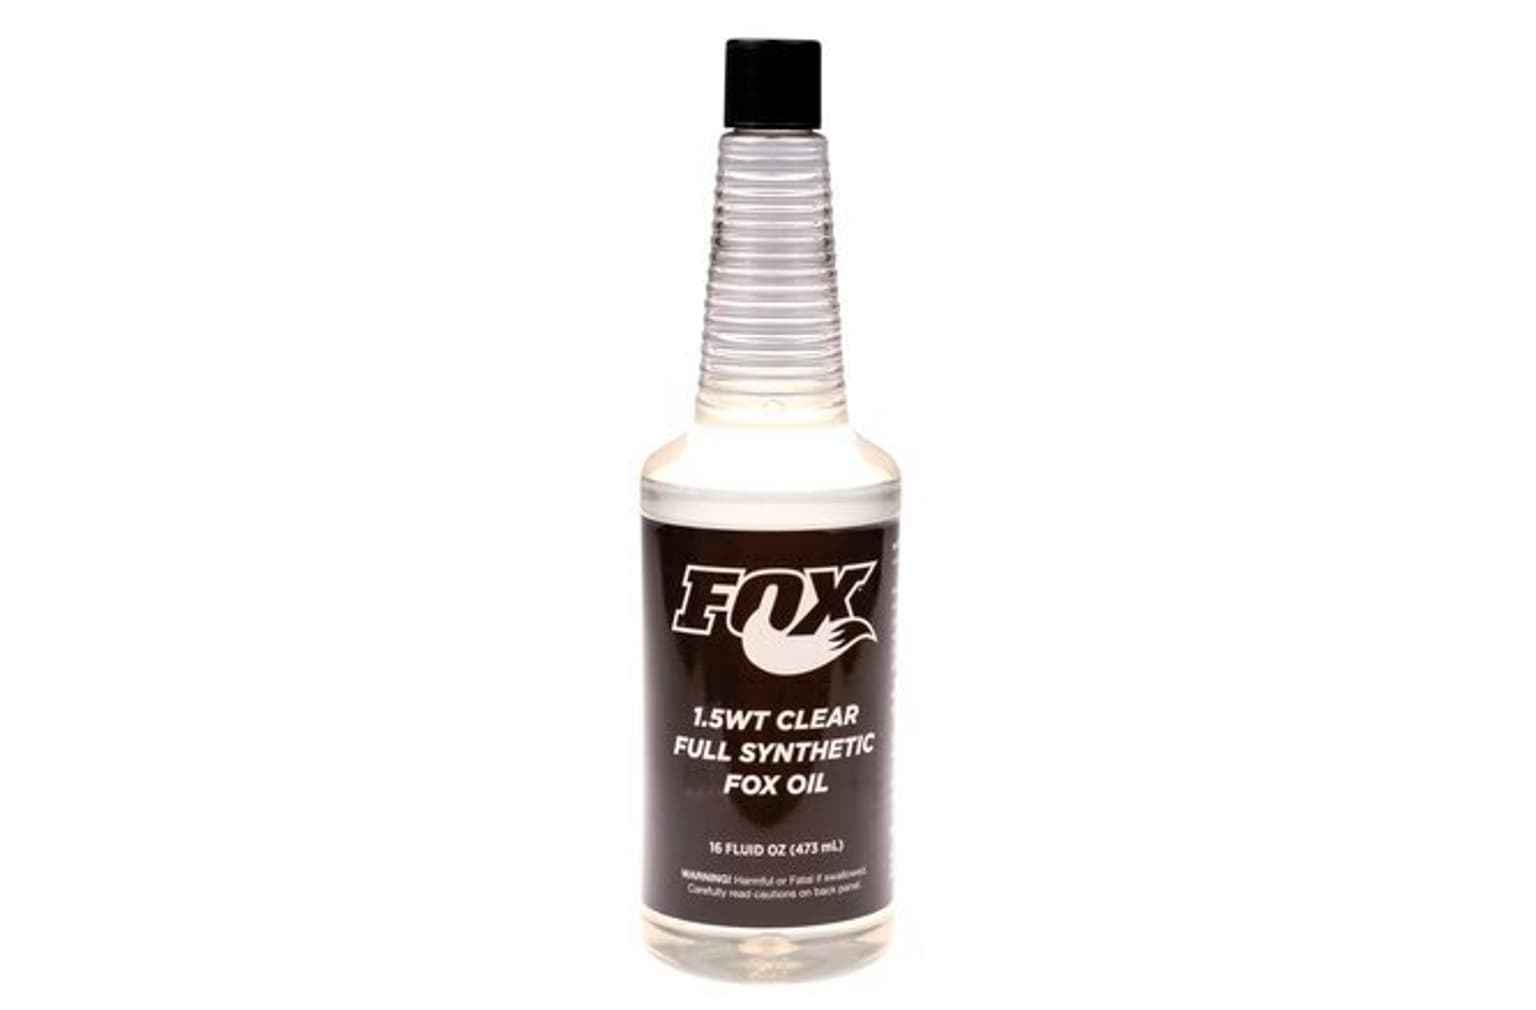 Fox Fox Oil AM 1.5wt Synthetic 16oz. clear Schmiermittel 1